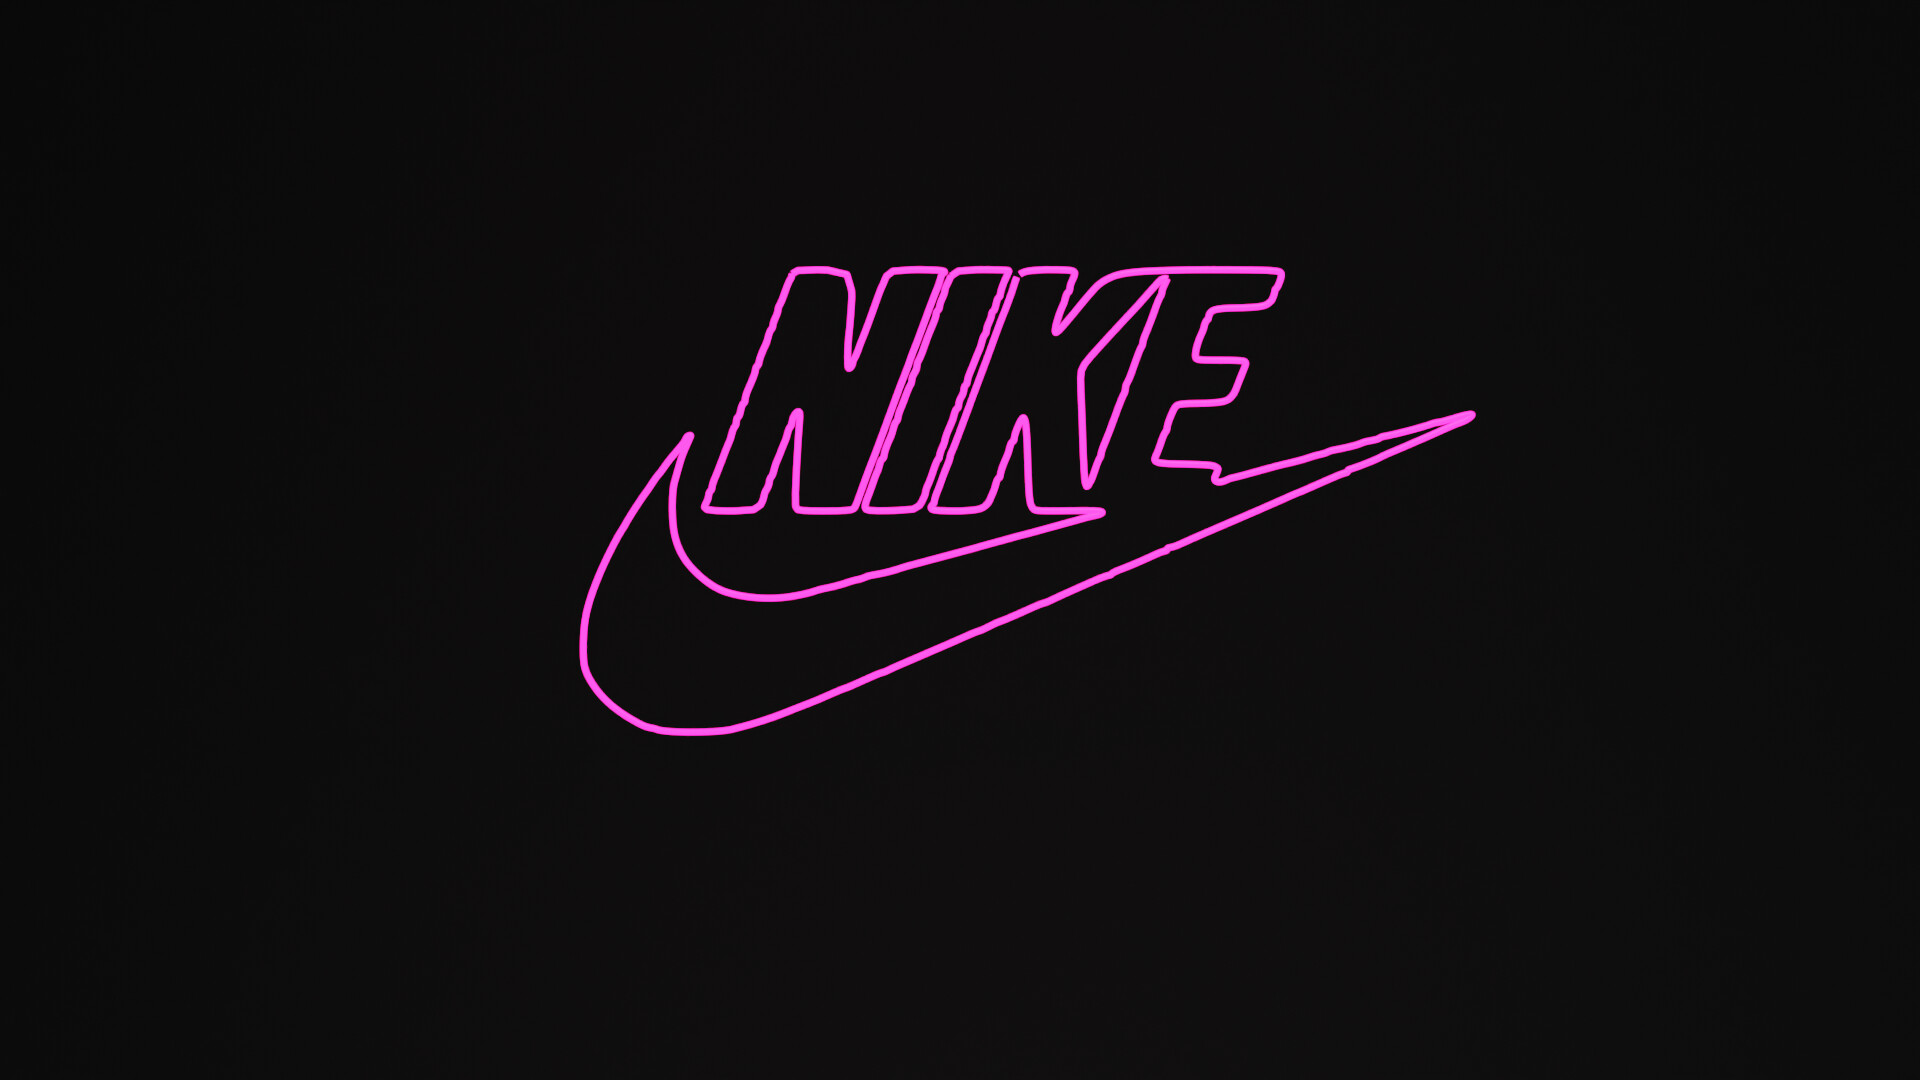 Nike Logo wallpaper, neon, black background, simple, logo, Nike, wallpaper, backgrounds, background, images, photos, pictures, free, download, free download - Nike